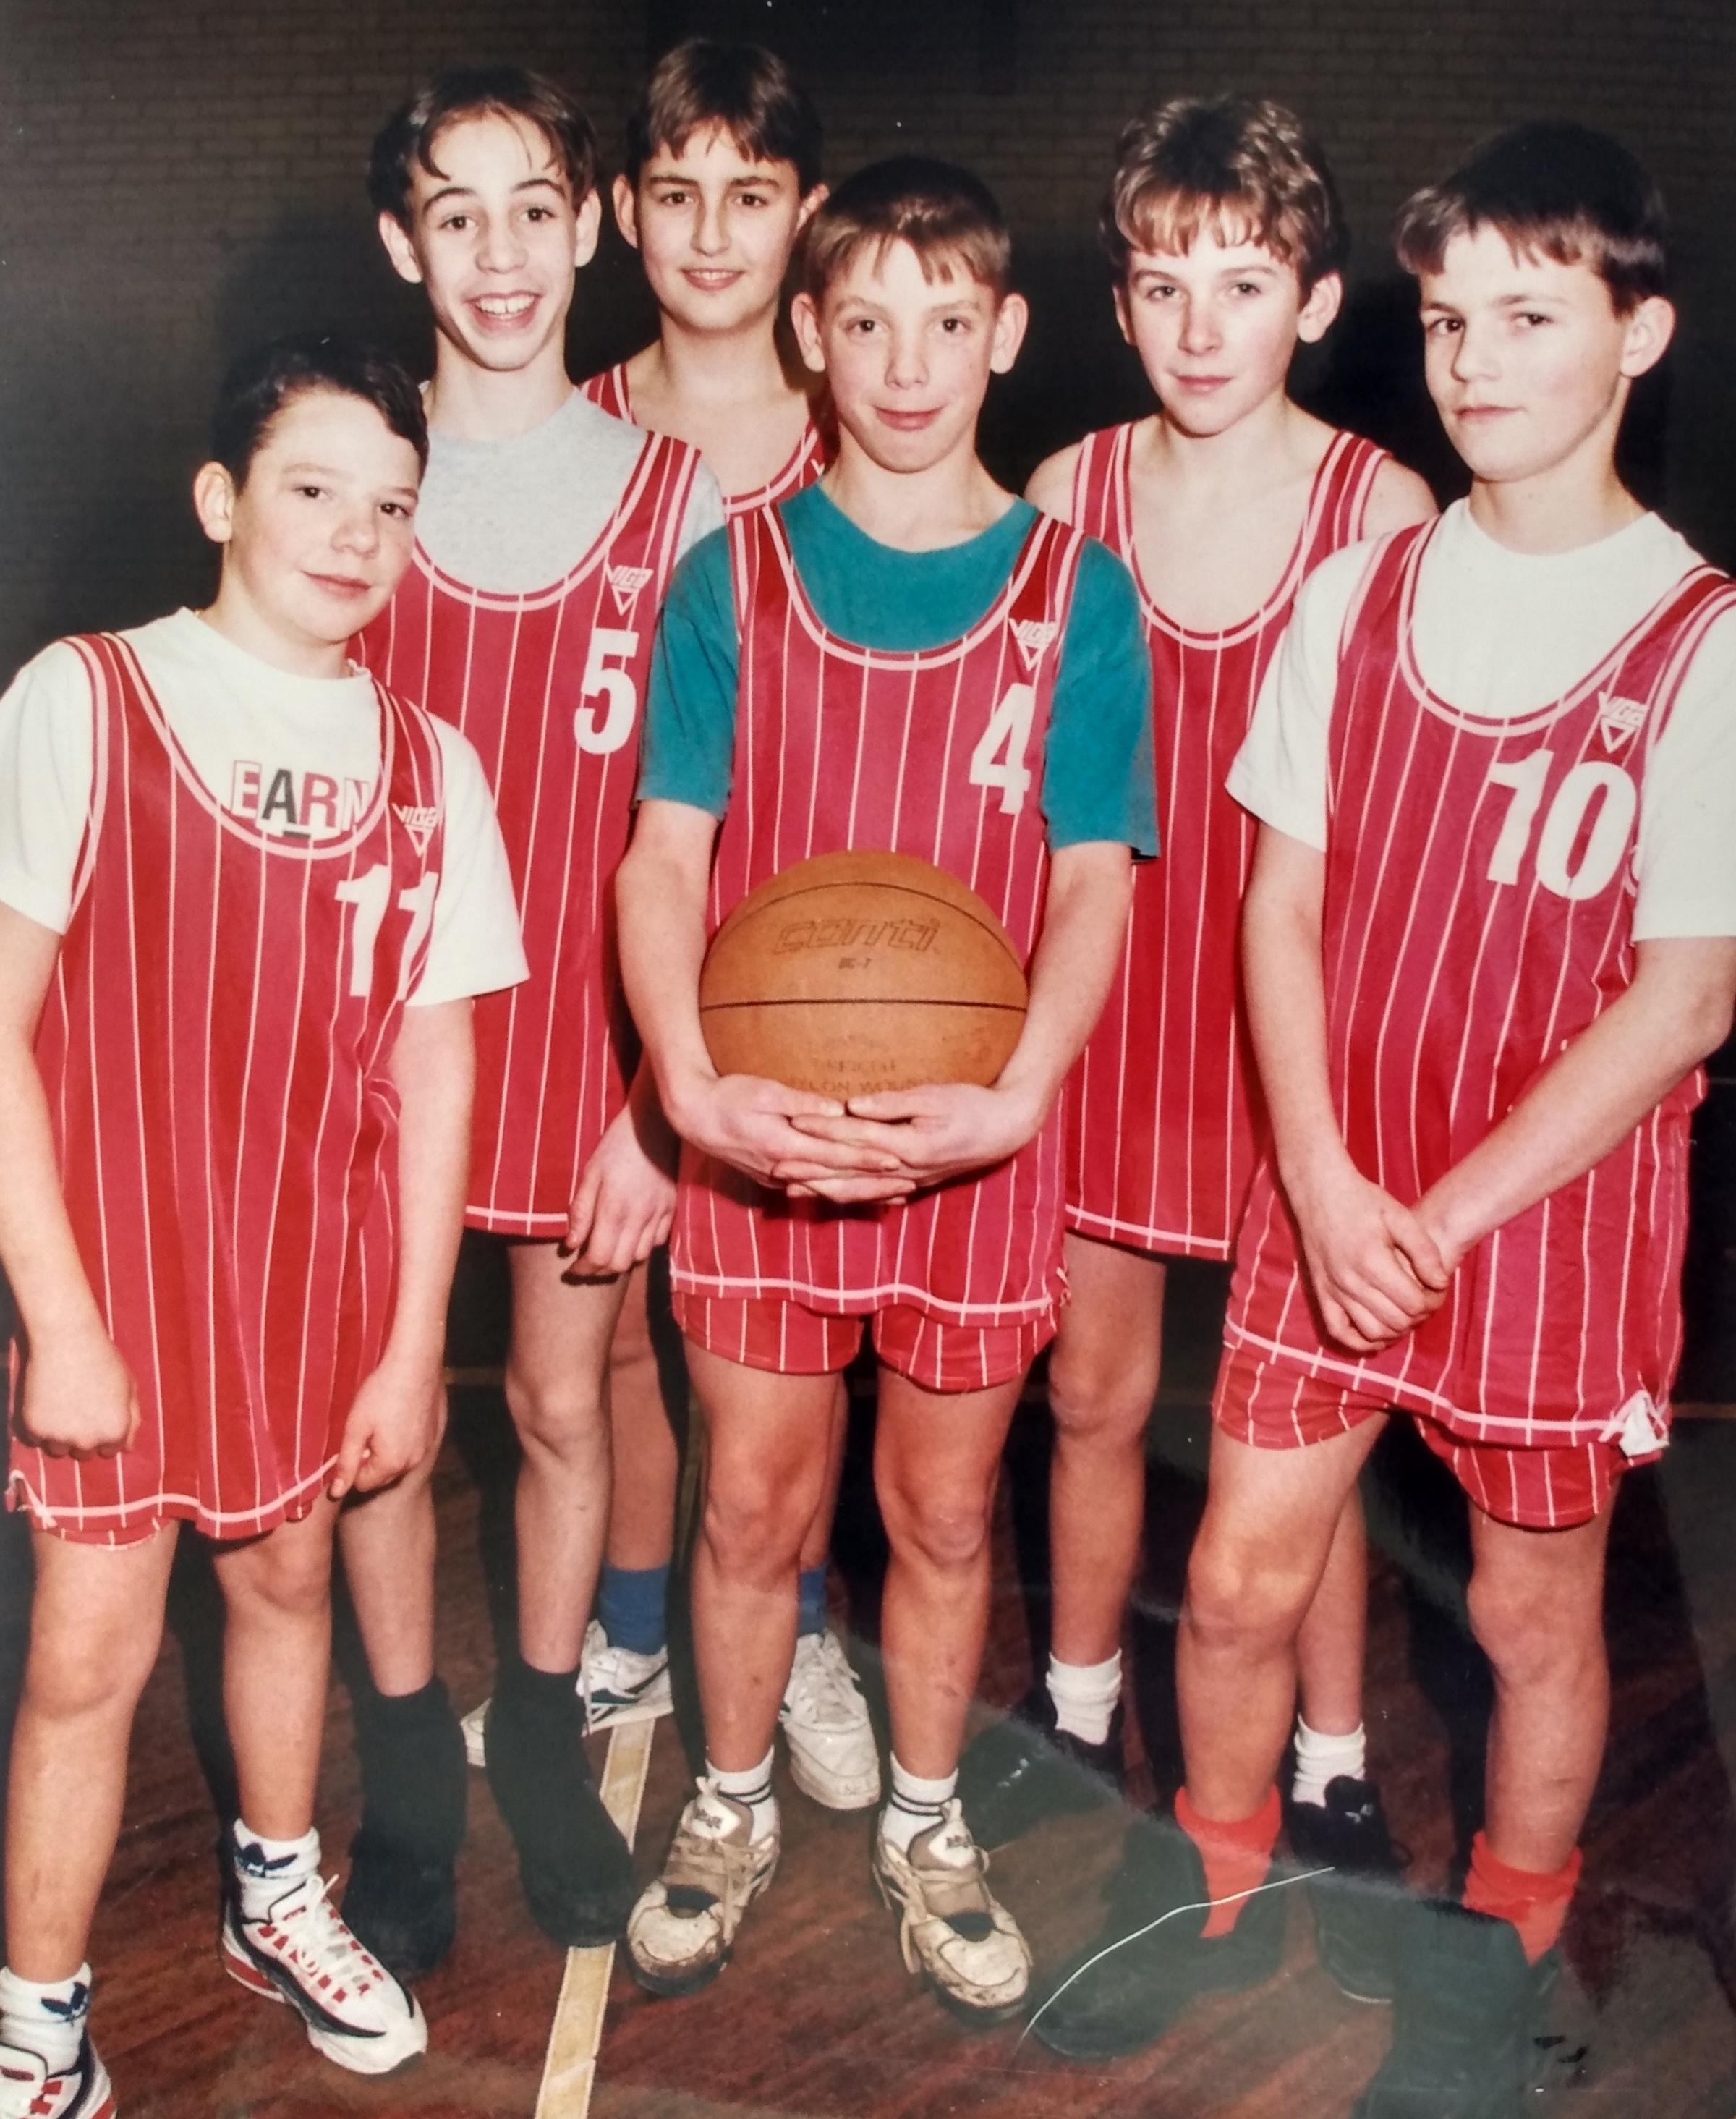 School basketballers pictured in February 1996. From left, Owen Delaney, Max Beats, Duncan Cook, Nicholas Hughes, Matthew Sharratt and Robert Kelly